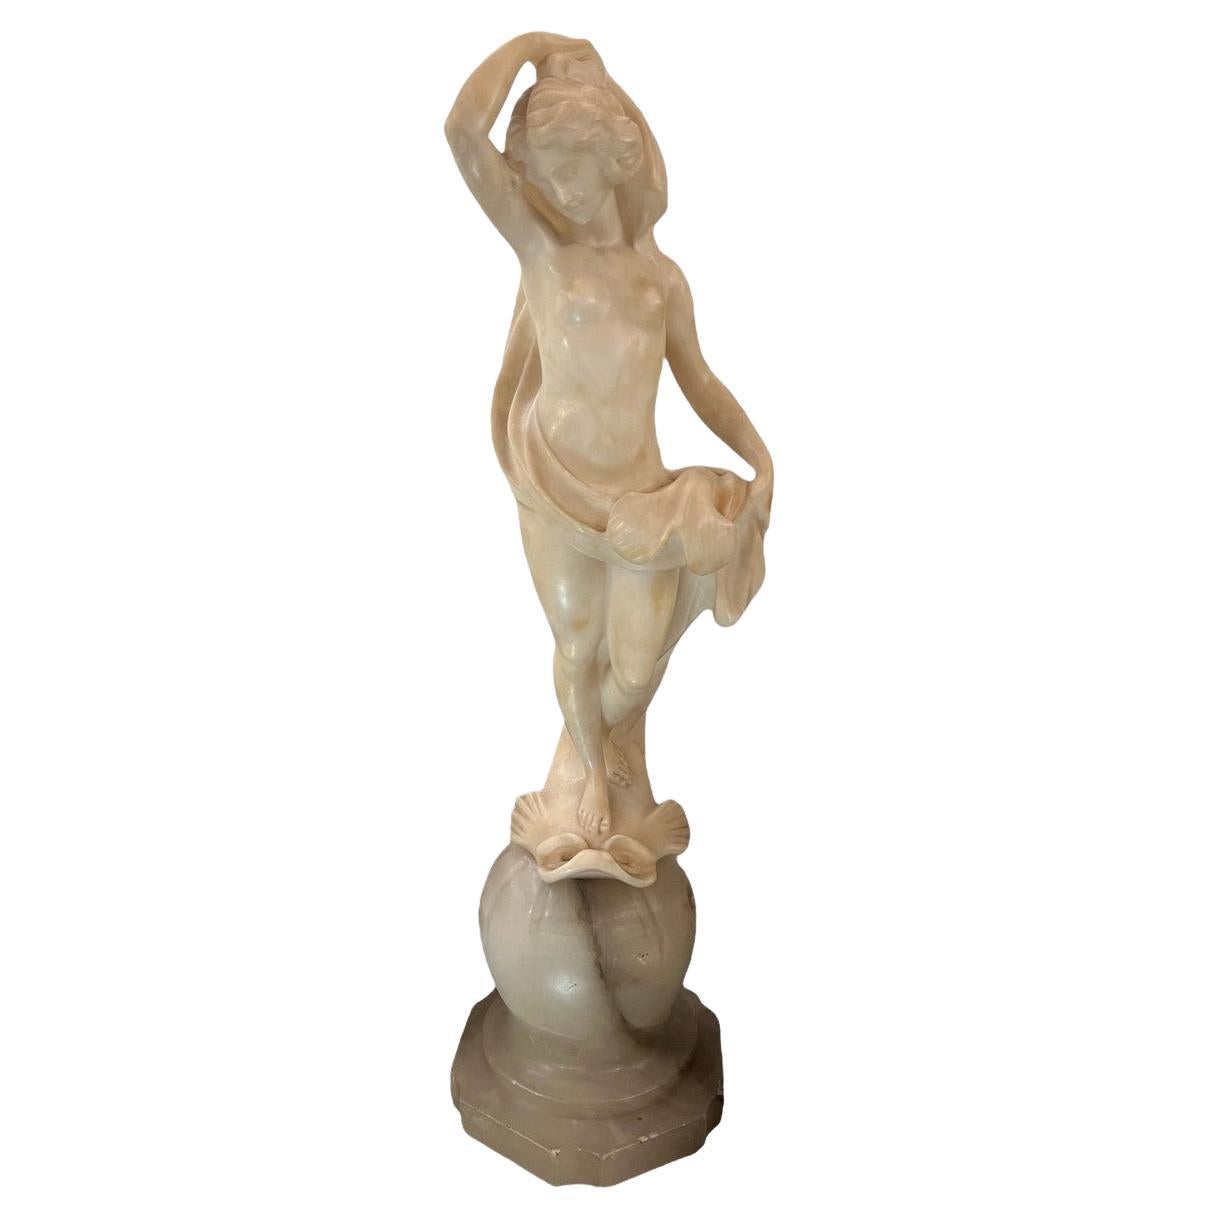 Skulptur einer Frau mit Licht aus Marmor, 1900, Frankreich, Jugendstil, Jugendstil